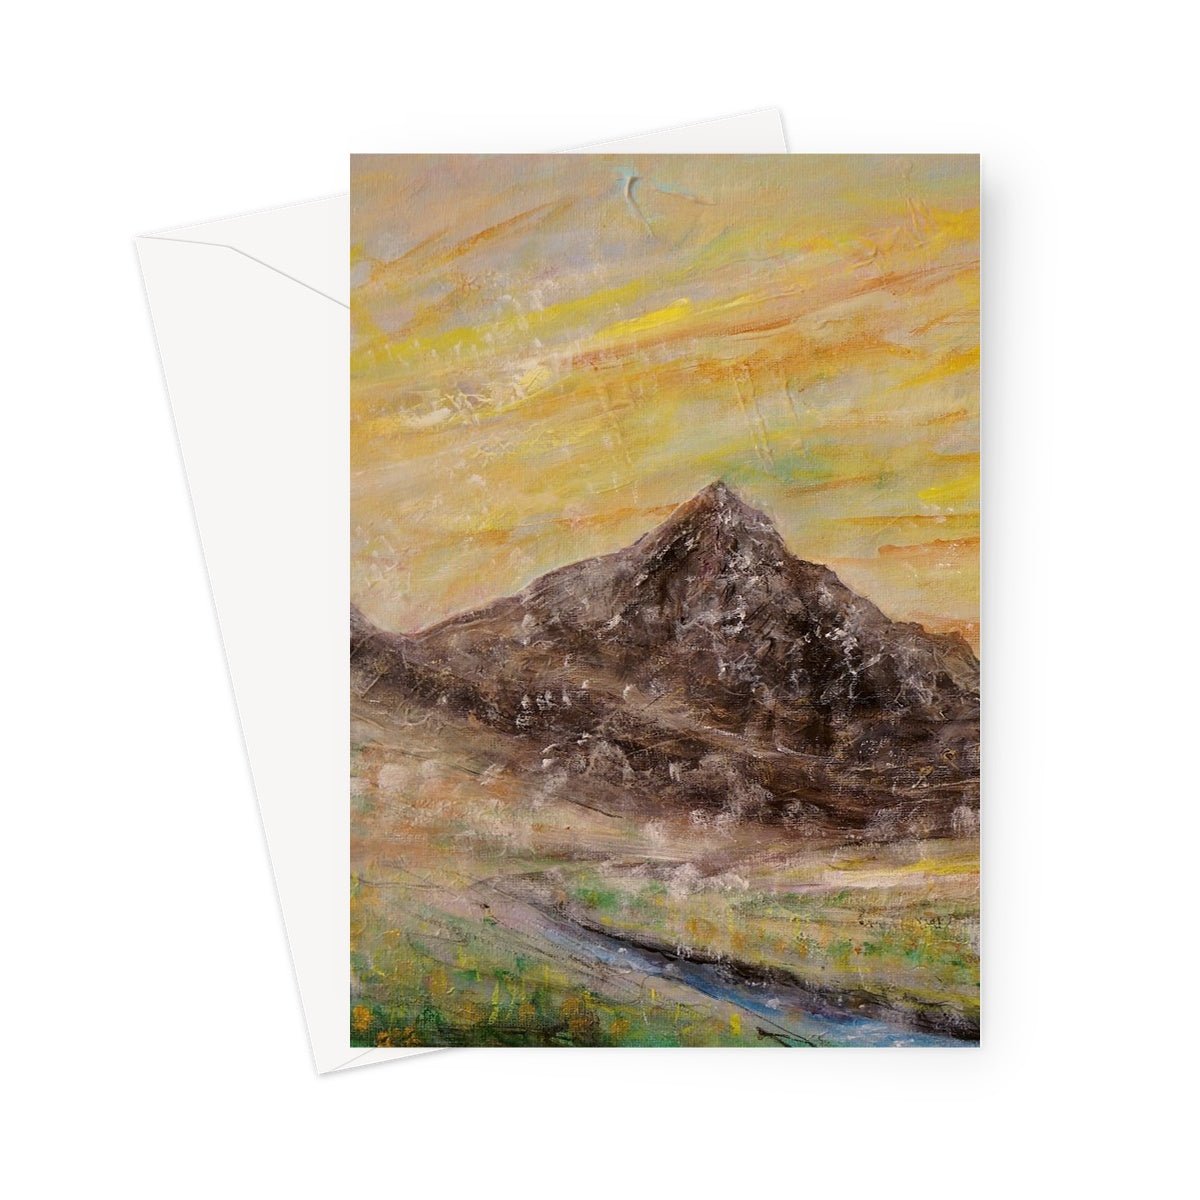 Glen Rosa Mist Arran Art Gifts Greeting Card-Greetings Cards-Arran Art Gallery-5"x7"-10 Cards-Paintings, Prints, Homeware, Art Gifts From Scotland By Scottish Artist Kevin Hunter